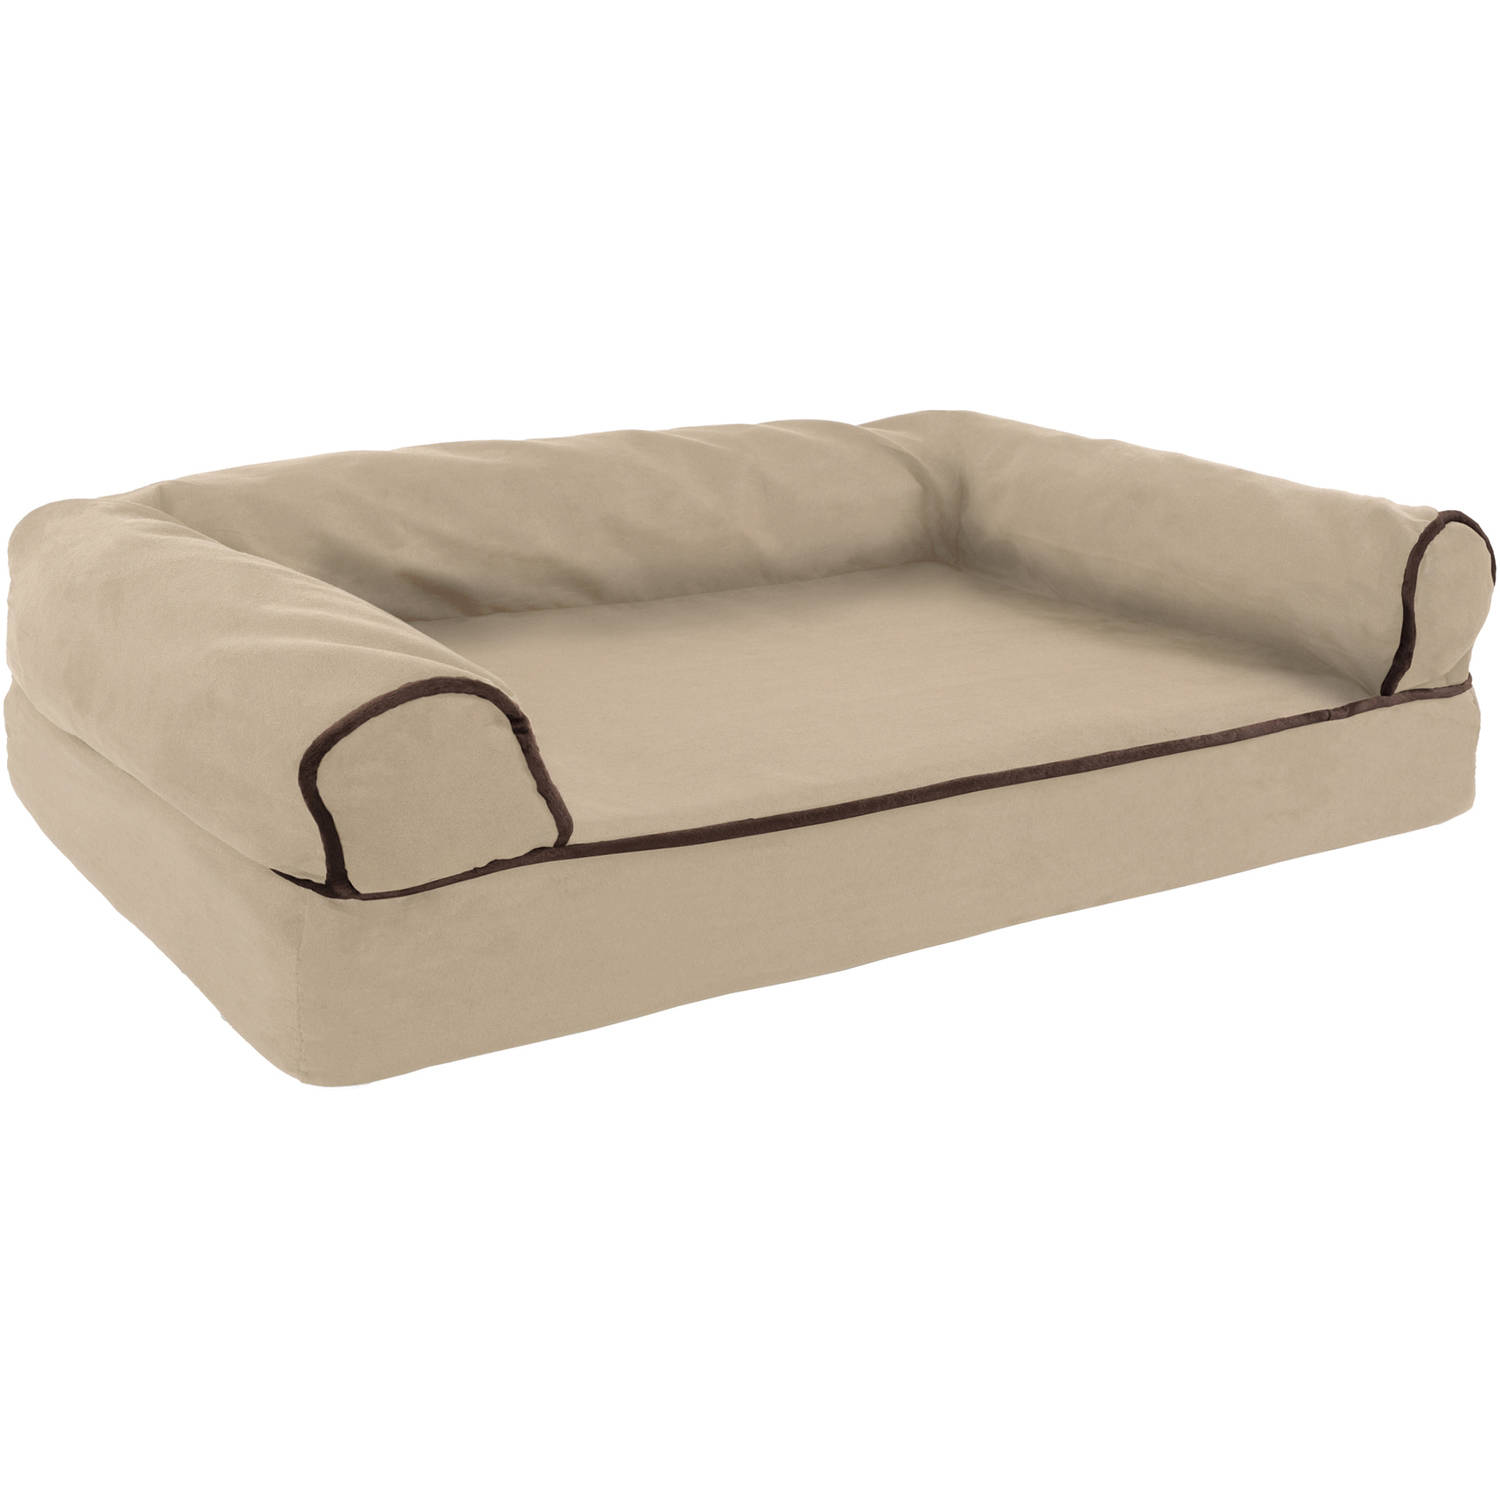 Orthopedic Dog Sofa Bed, Memory Foam Pet Bed with Foam Stuffed Bolsters PETMAKER - image 1 of 6